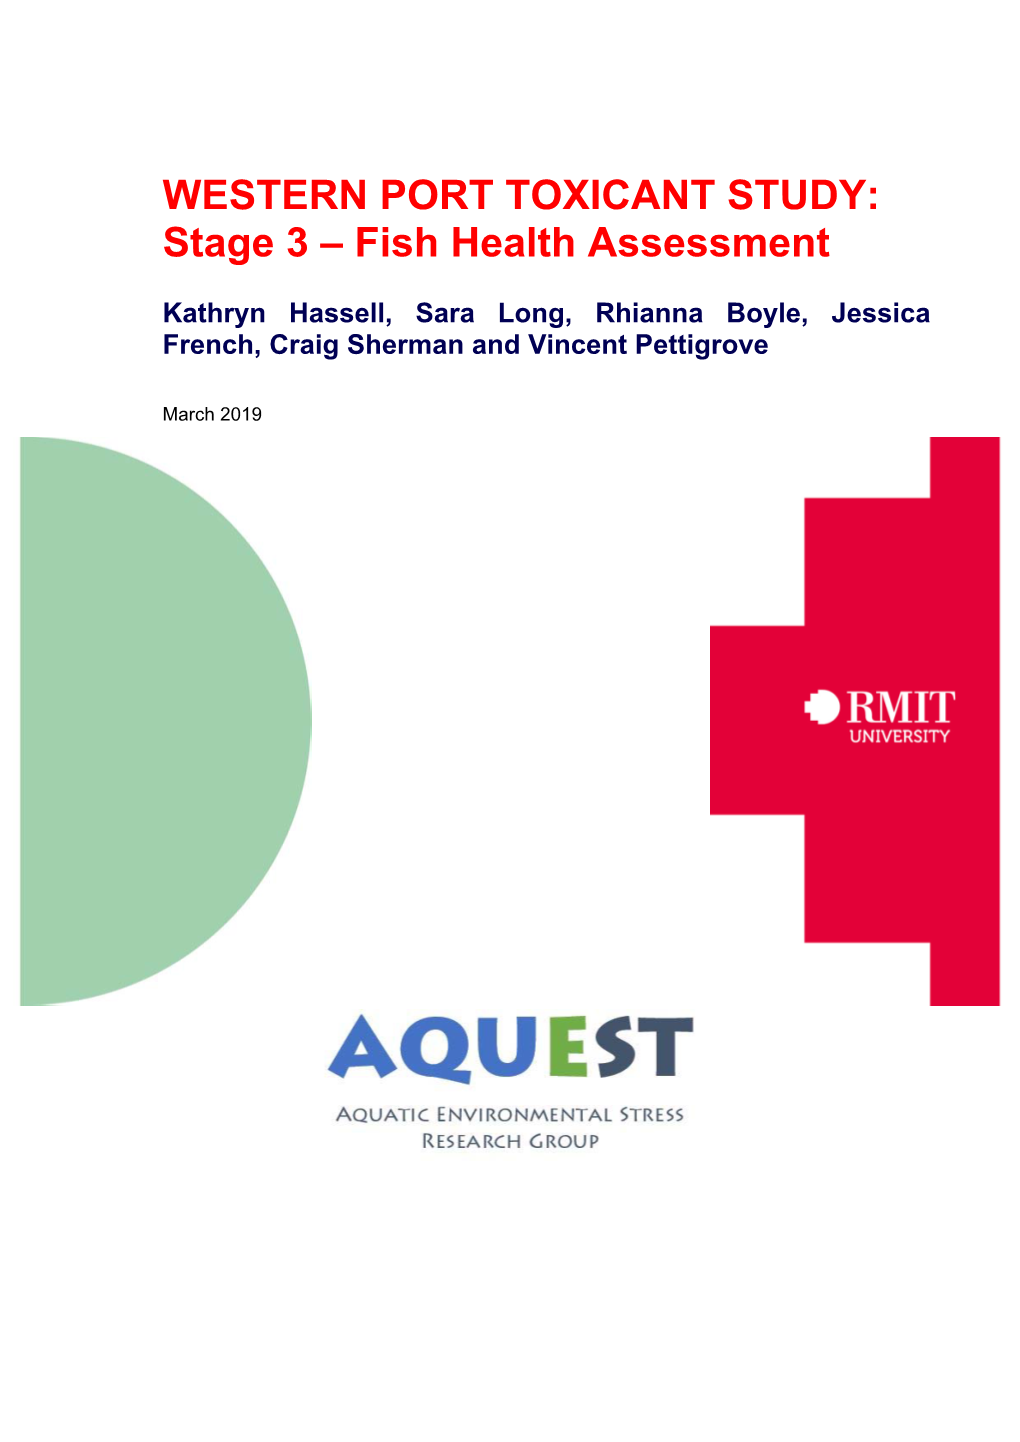 Fish Health Assessment